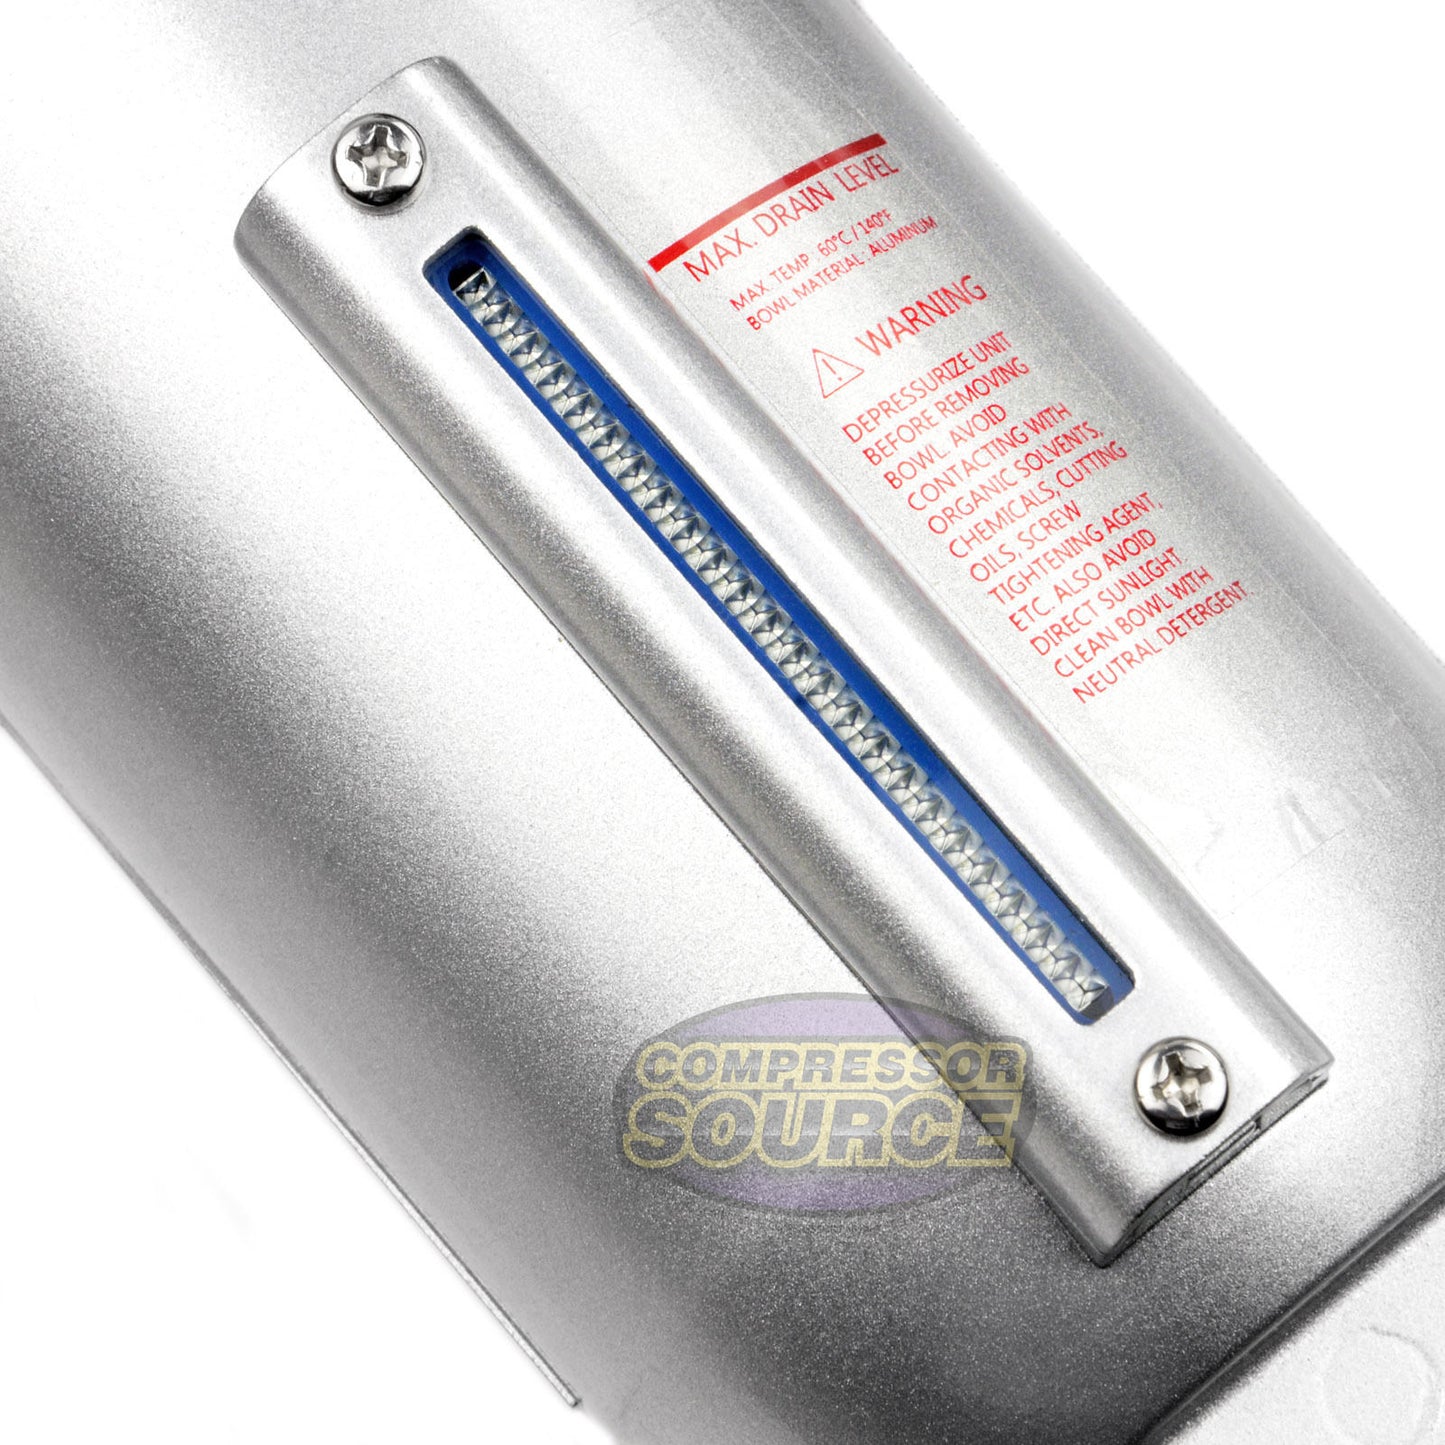 1" Compressor FRL Compressed Air Filter Regulator Oiler Lubricator w/ Auto Drain